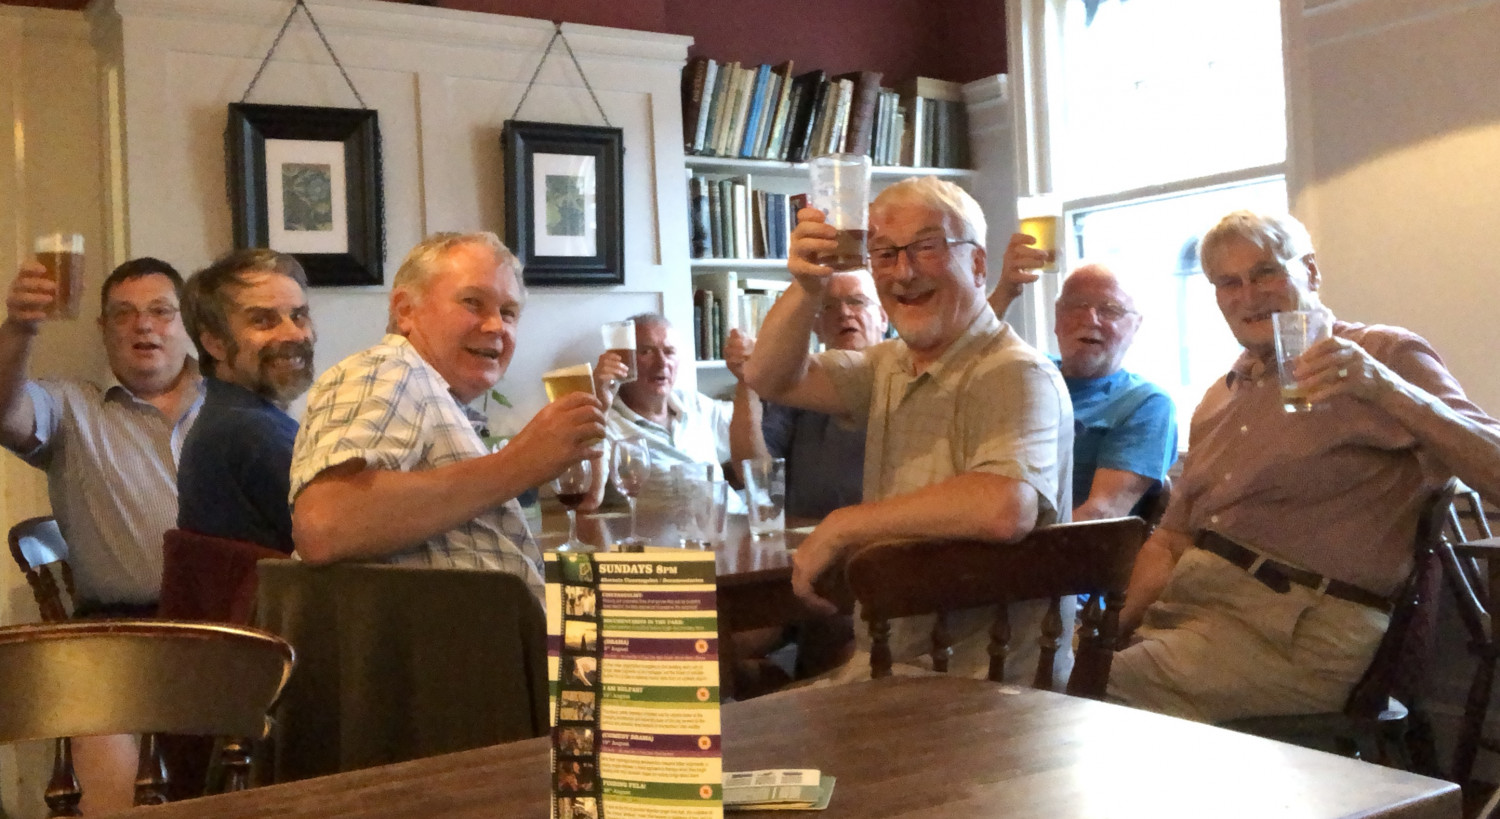 Gentlemen drinking beer in the Park Tavern